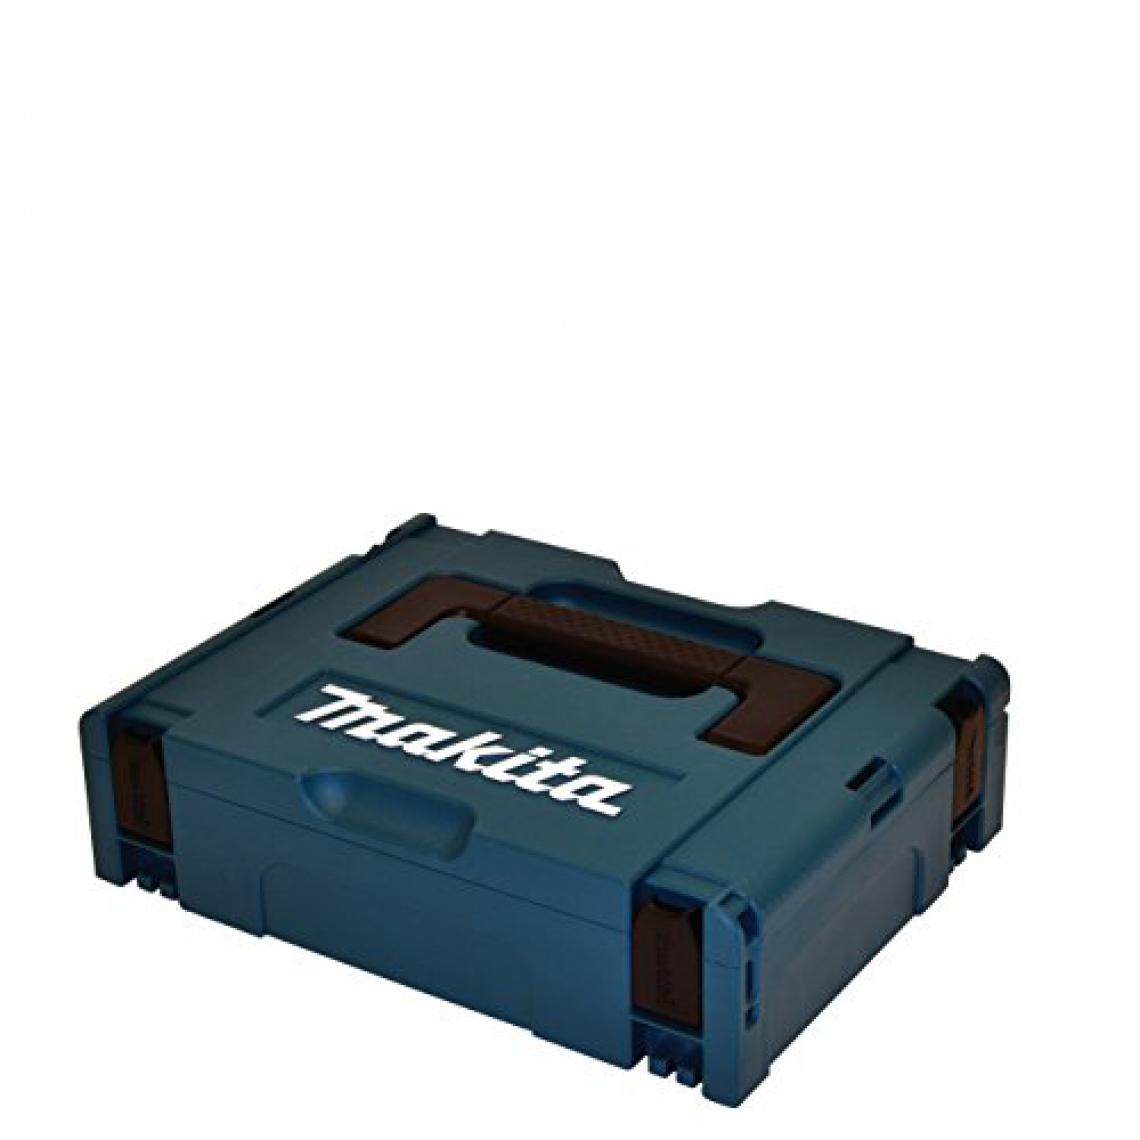 Makita - Systemkoffer Größe 1 - Accessoires sciage, tronçonnage